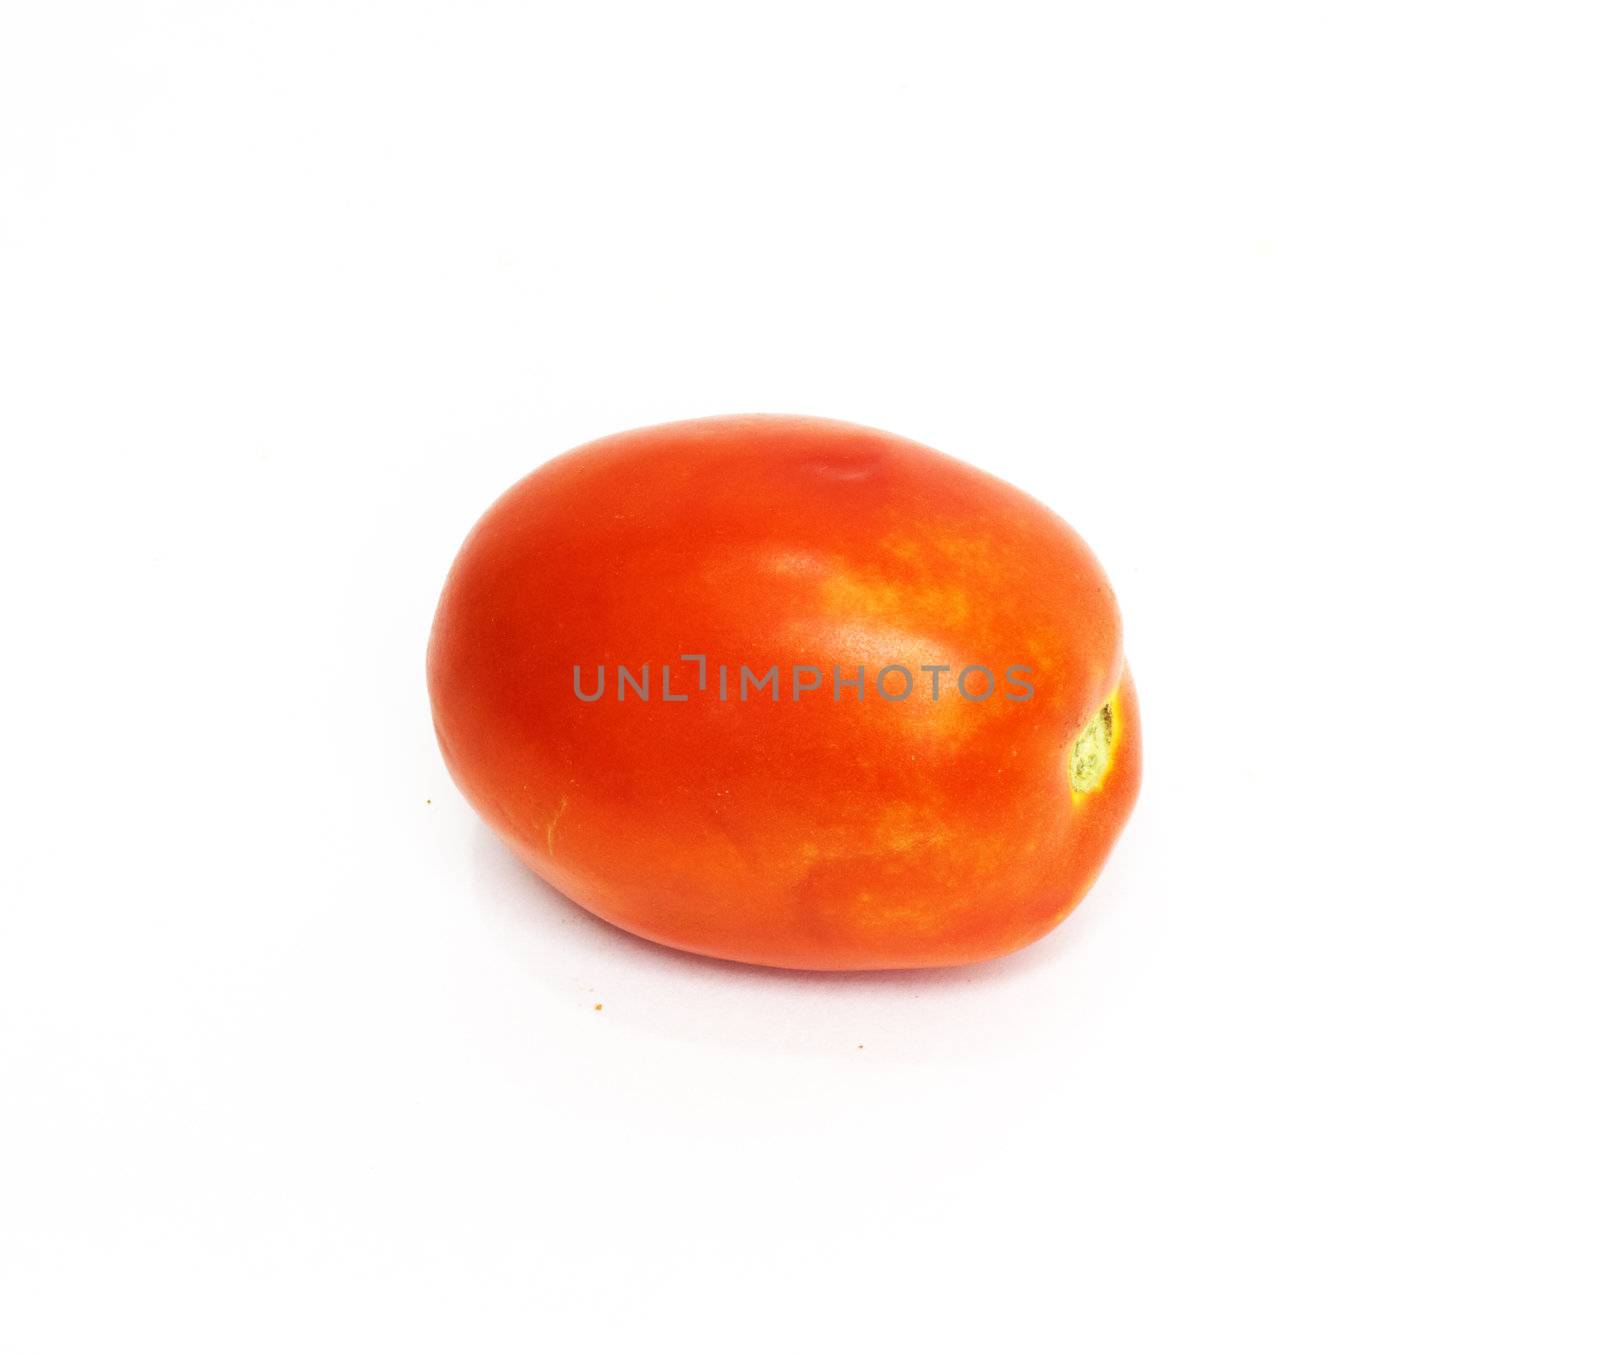 Red Tomato by schankz